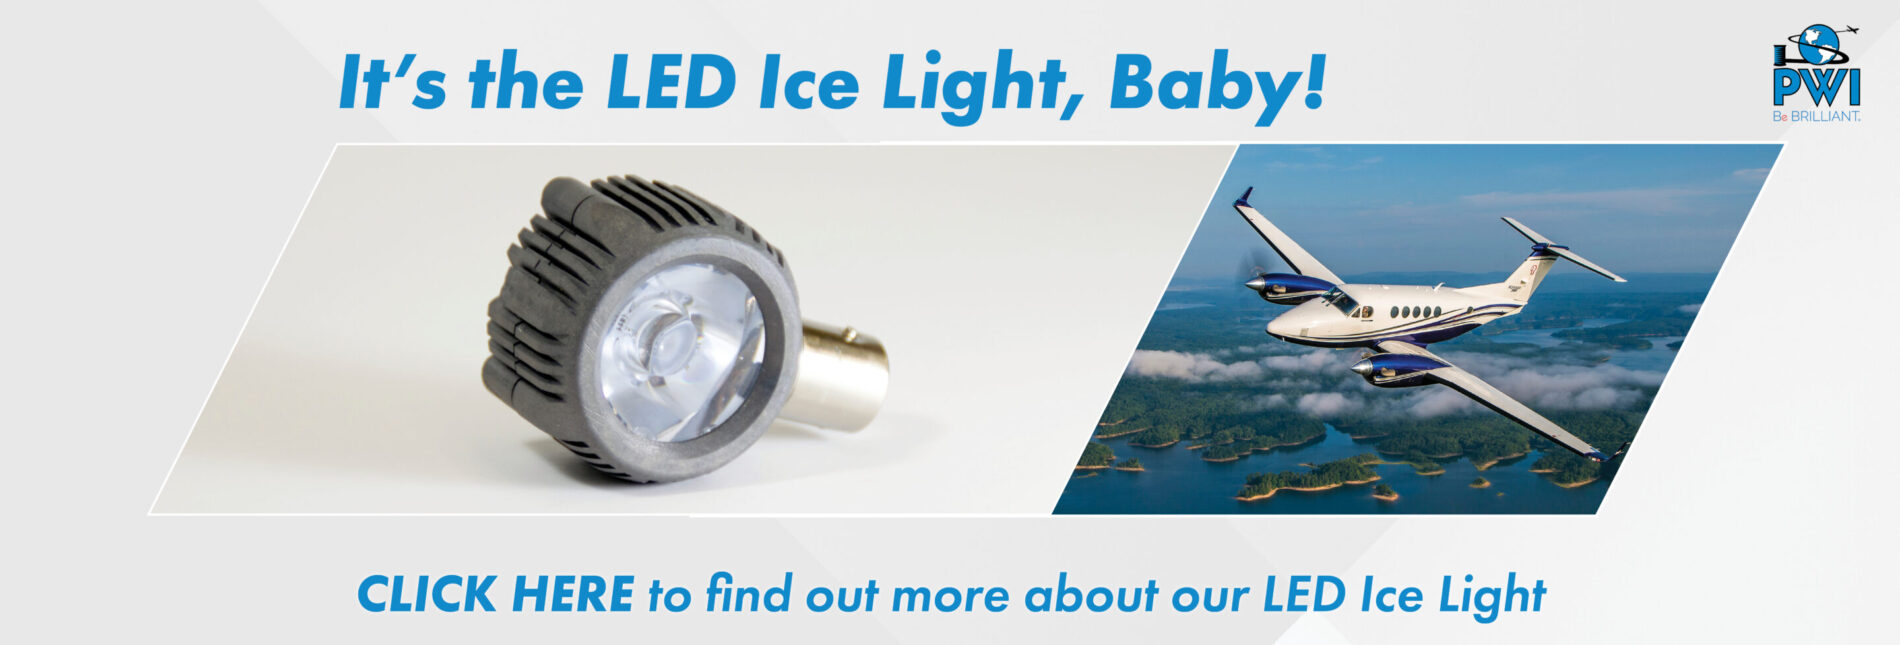 It's the LED Ice Light! - PWI